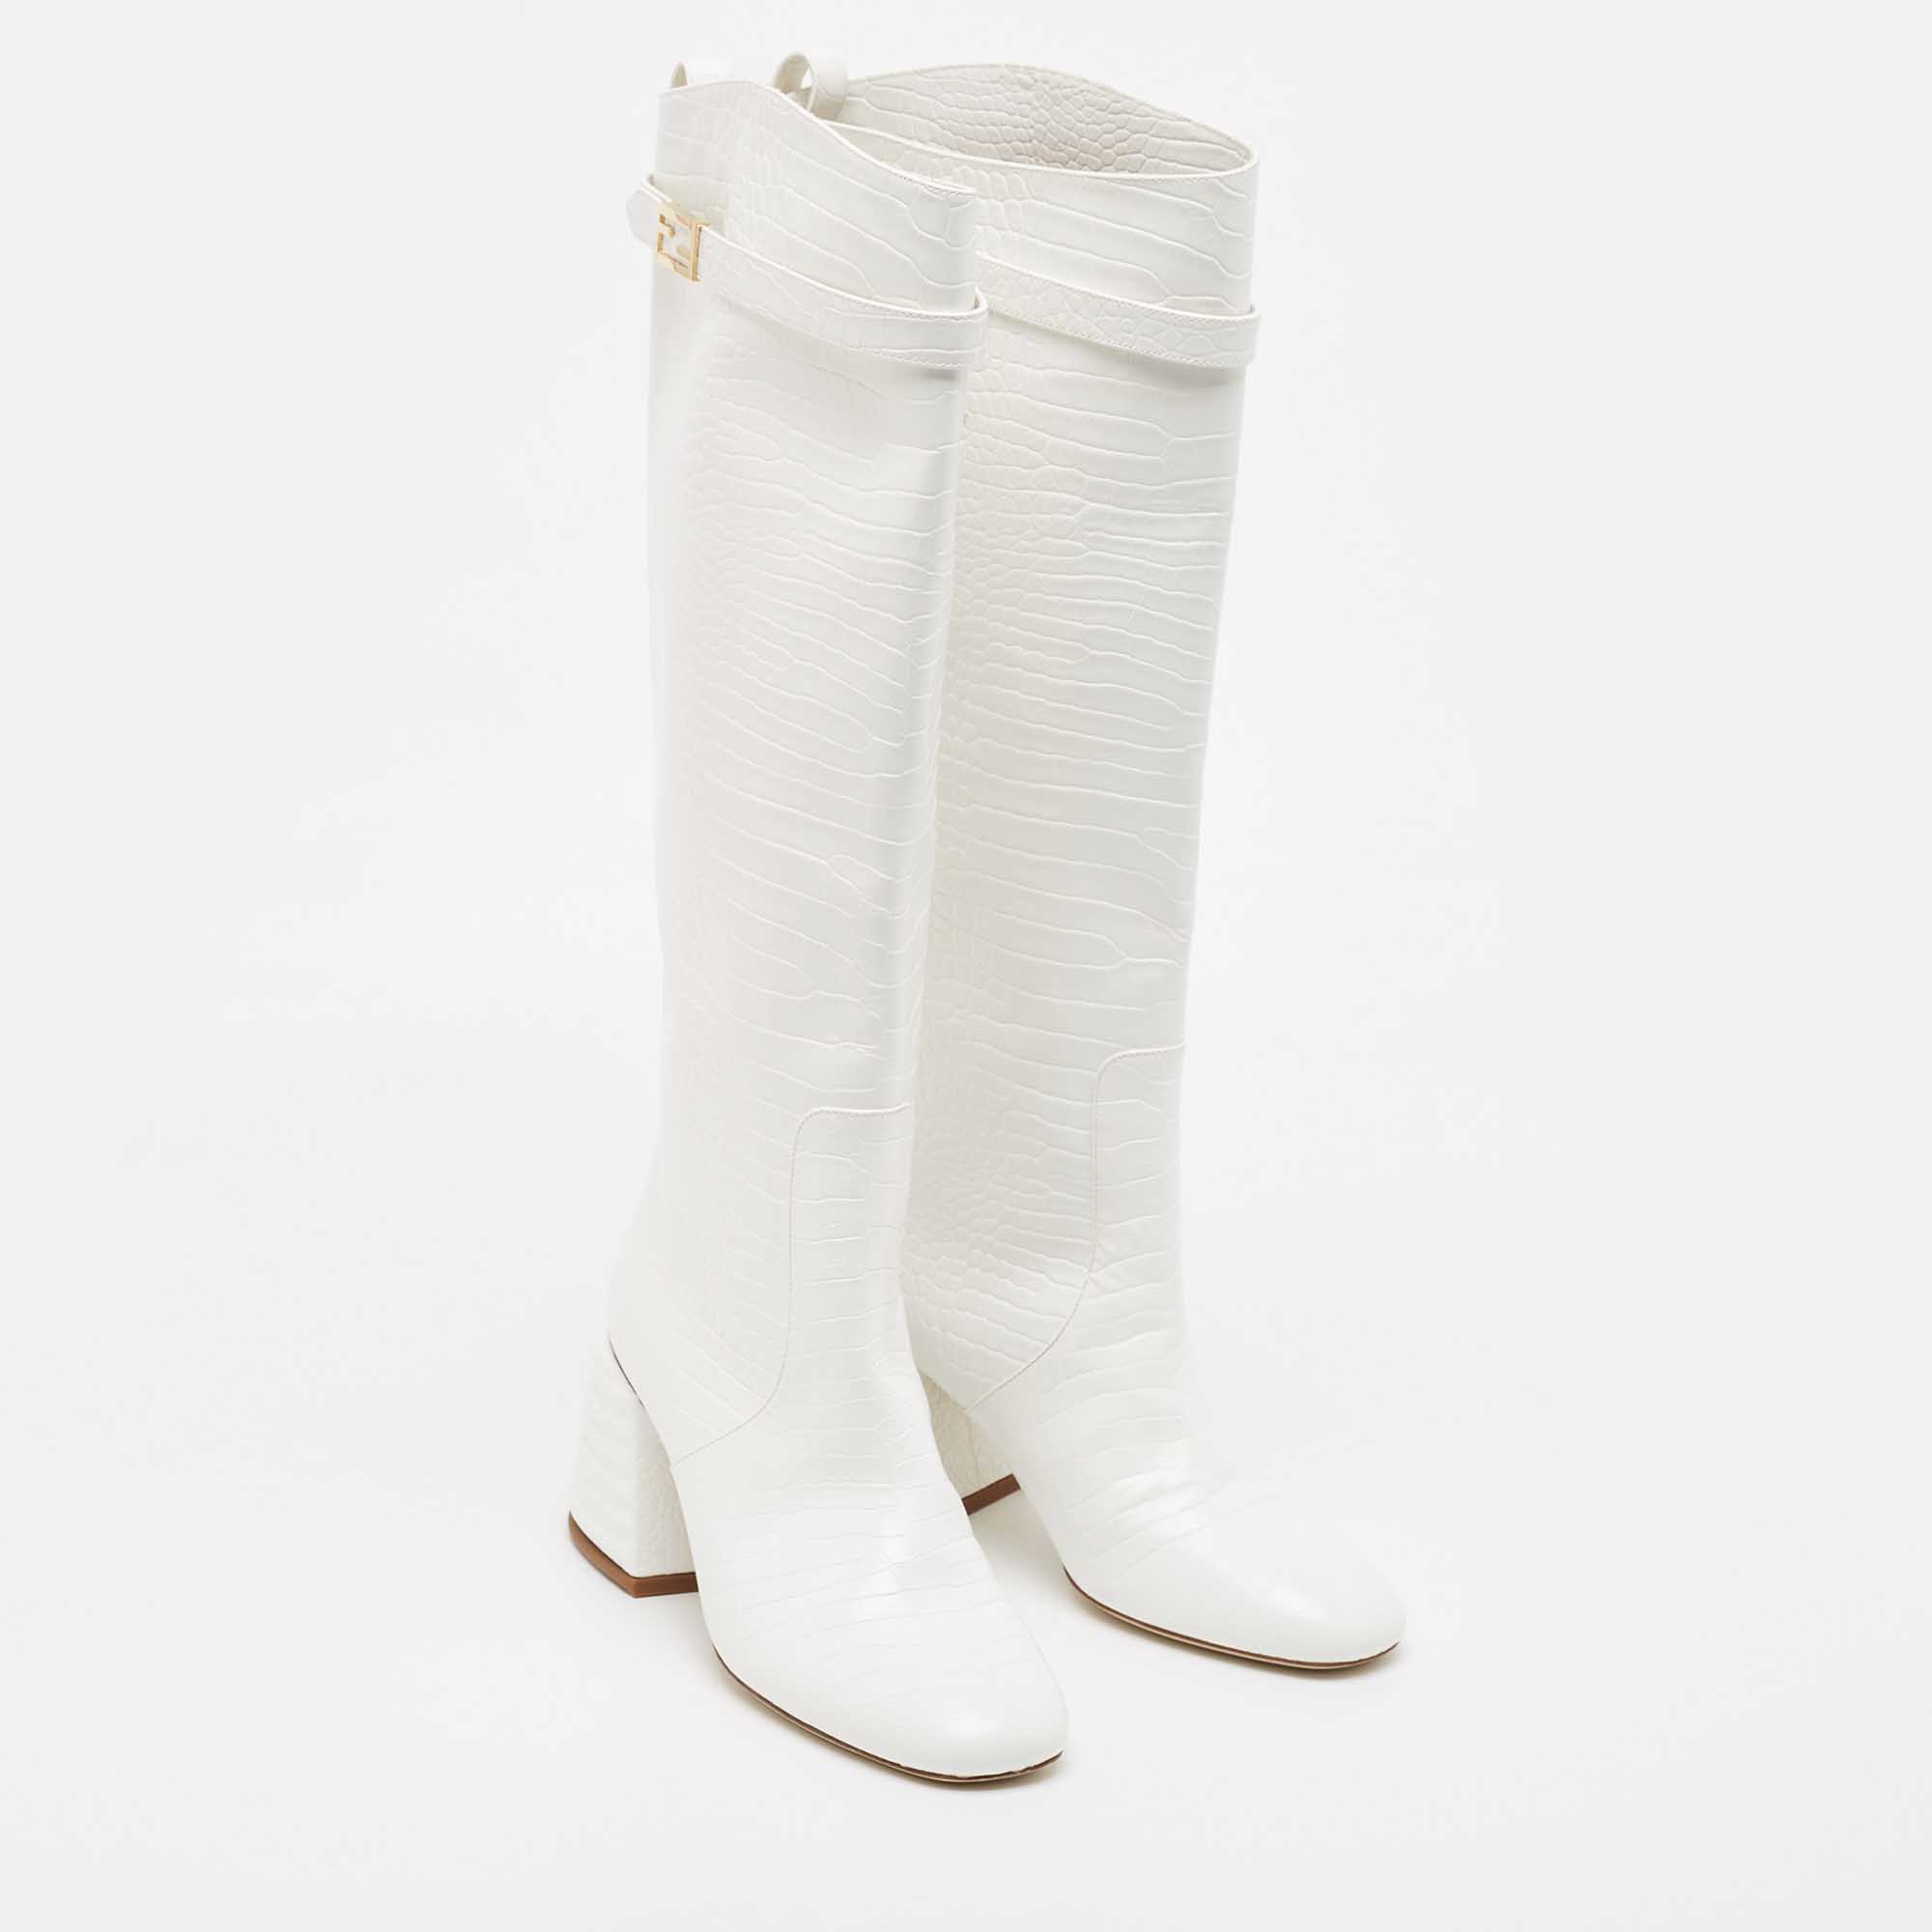 Fendi White Croc Embossed Leather Promenade Knee Length Boots Size 38